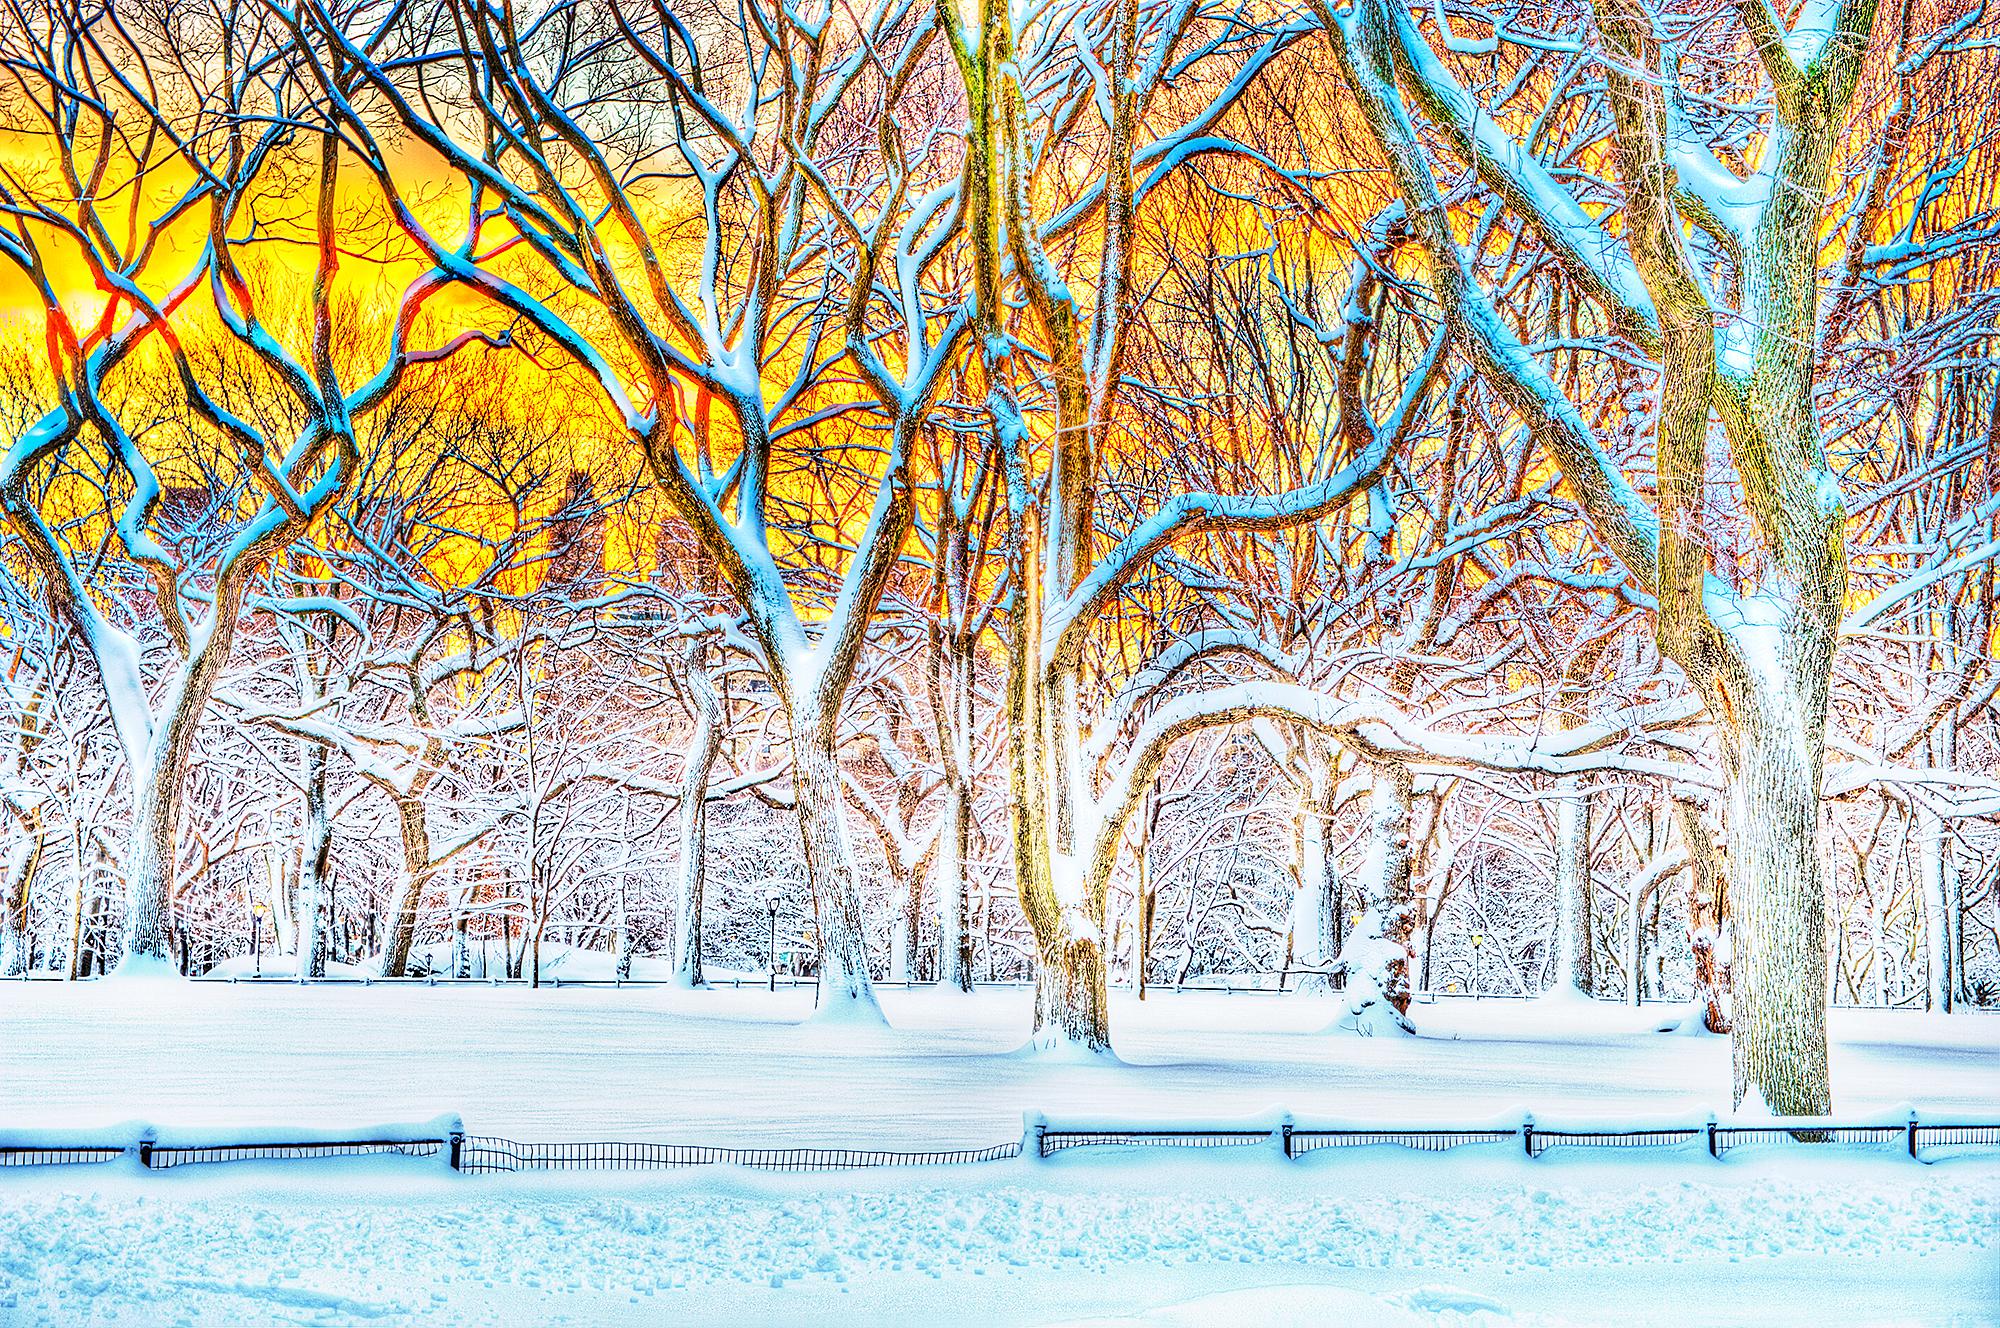 Central Park Winter Scene,  Charles Burchfield-esque Landscape